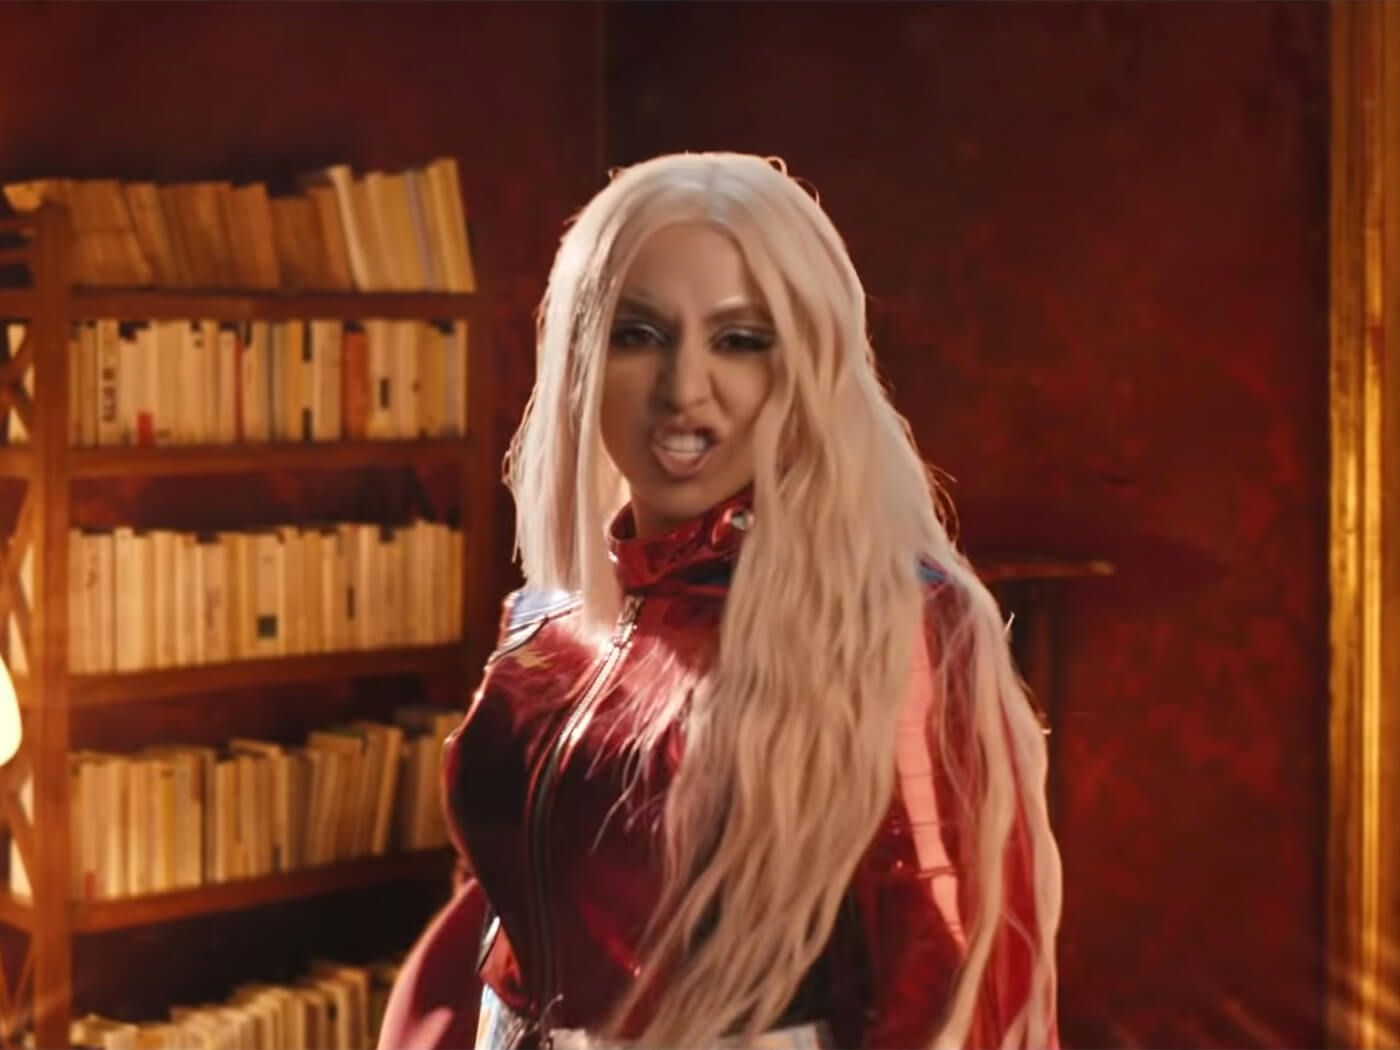 Ava Max transforms into a superhero in video for “Torn”